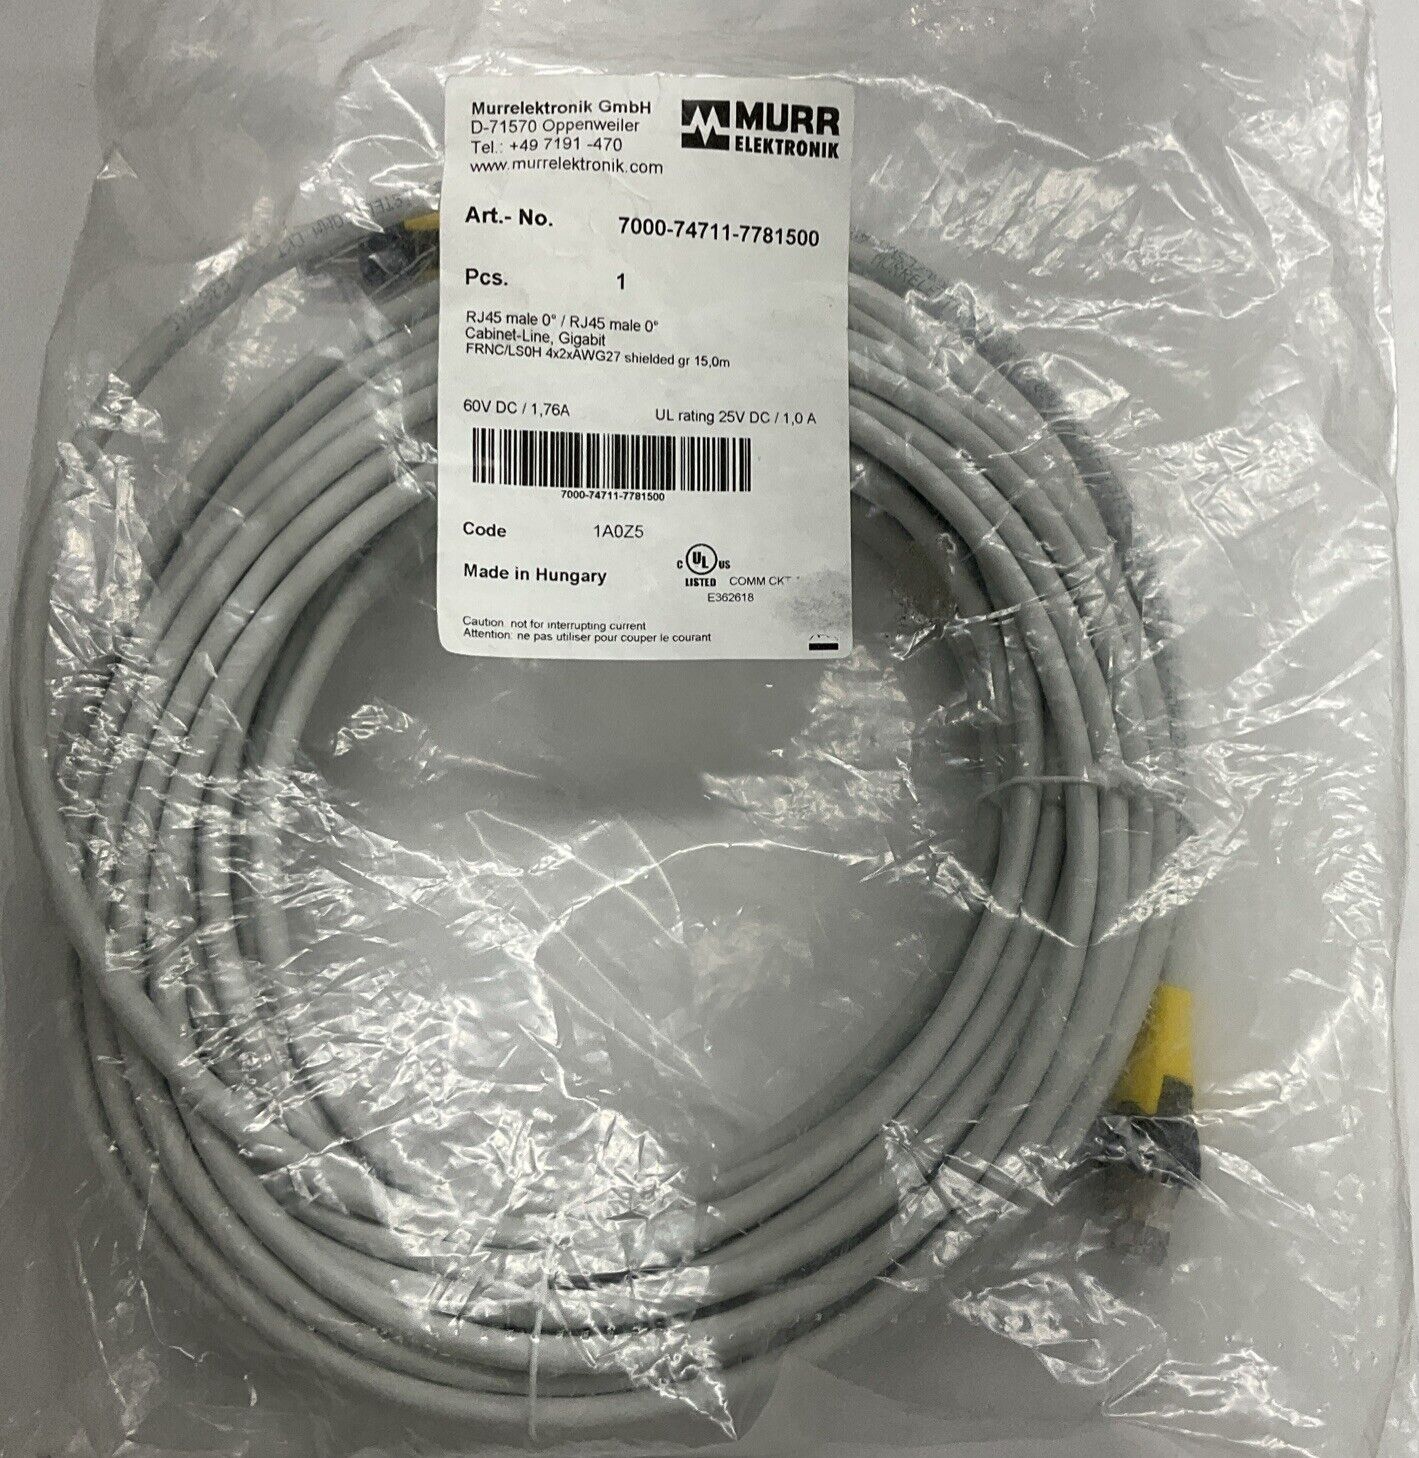 Murr 7000-74711-7781500 Gigabit Shielded RJ45 Male/Male 15-Meter Cable (CBL122) - 0